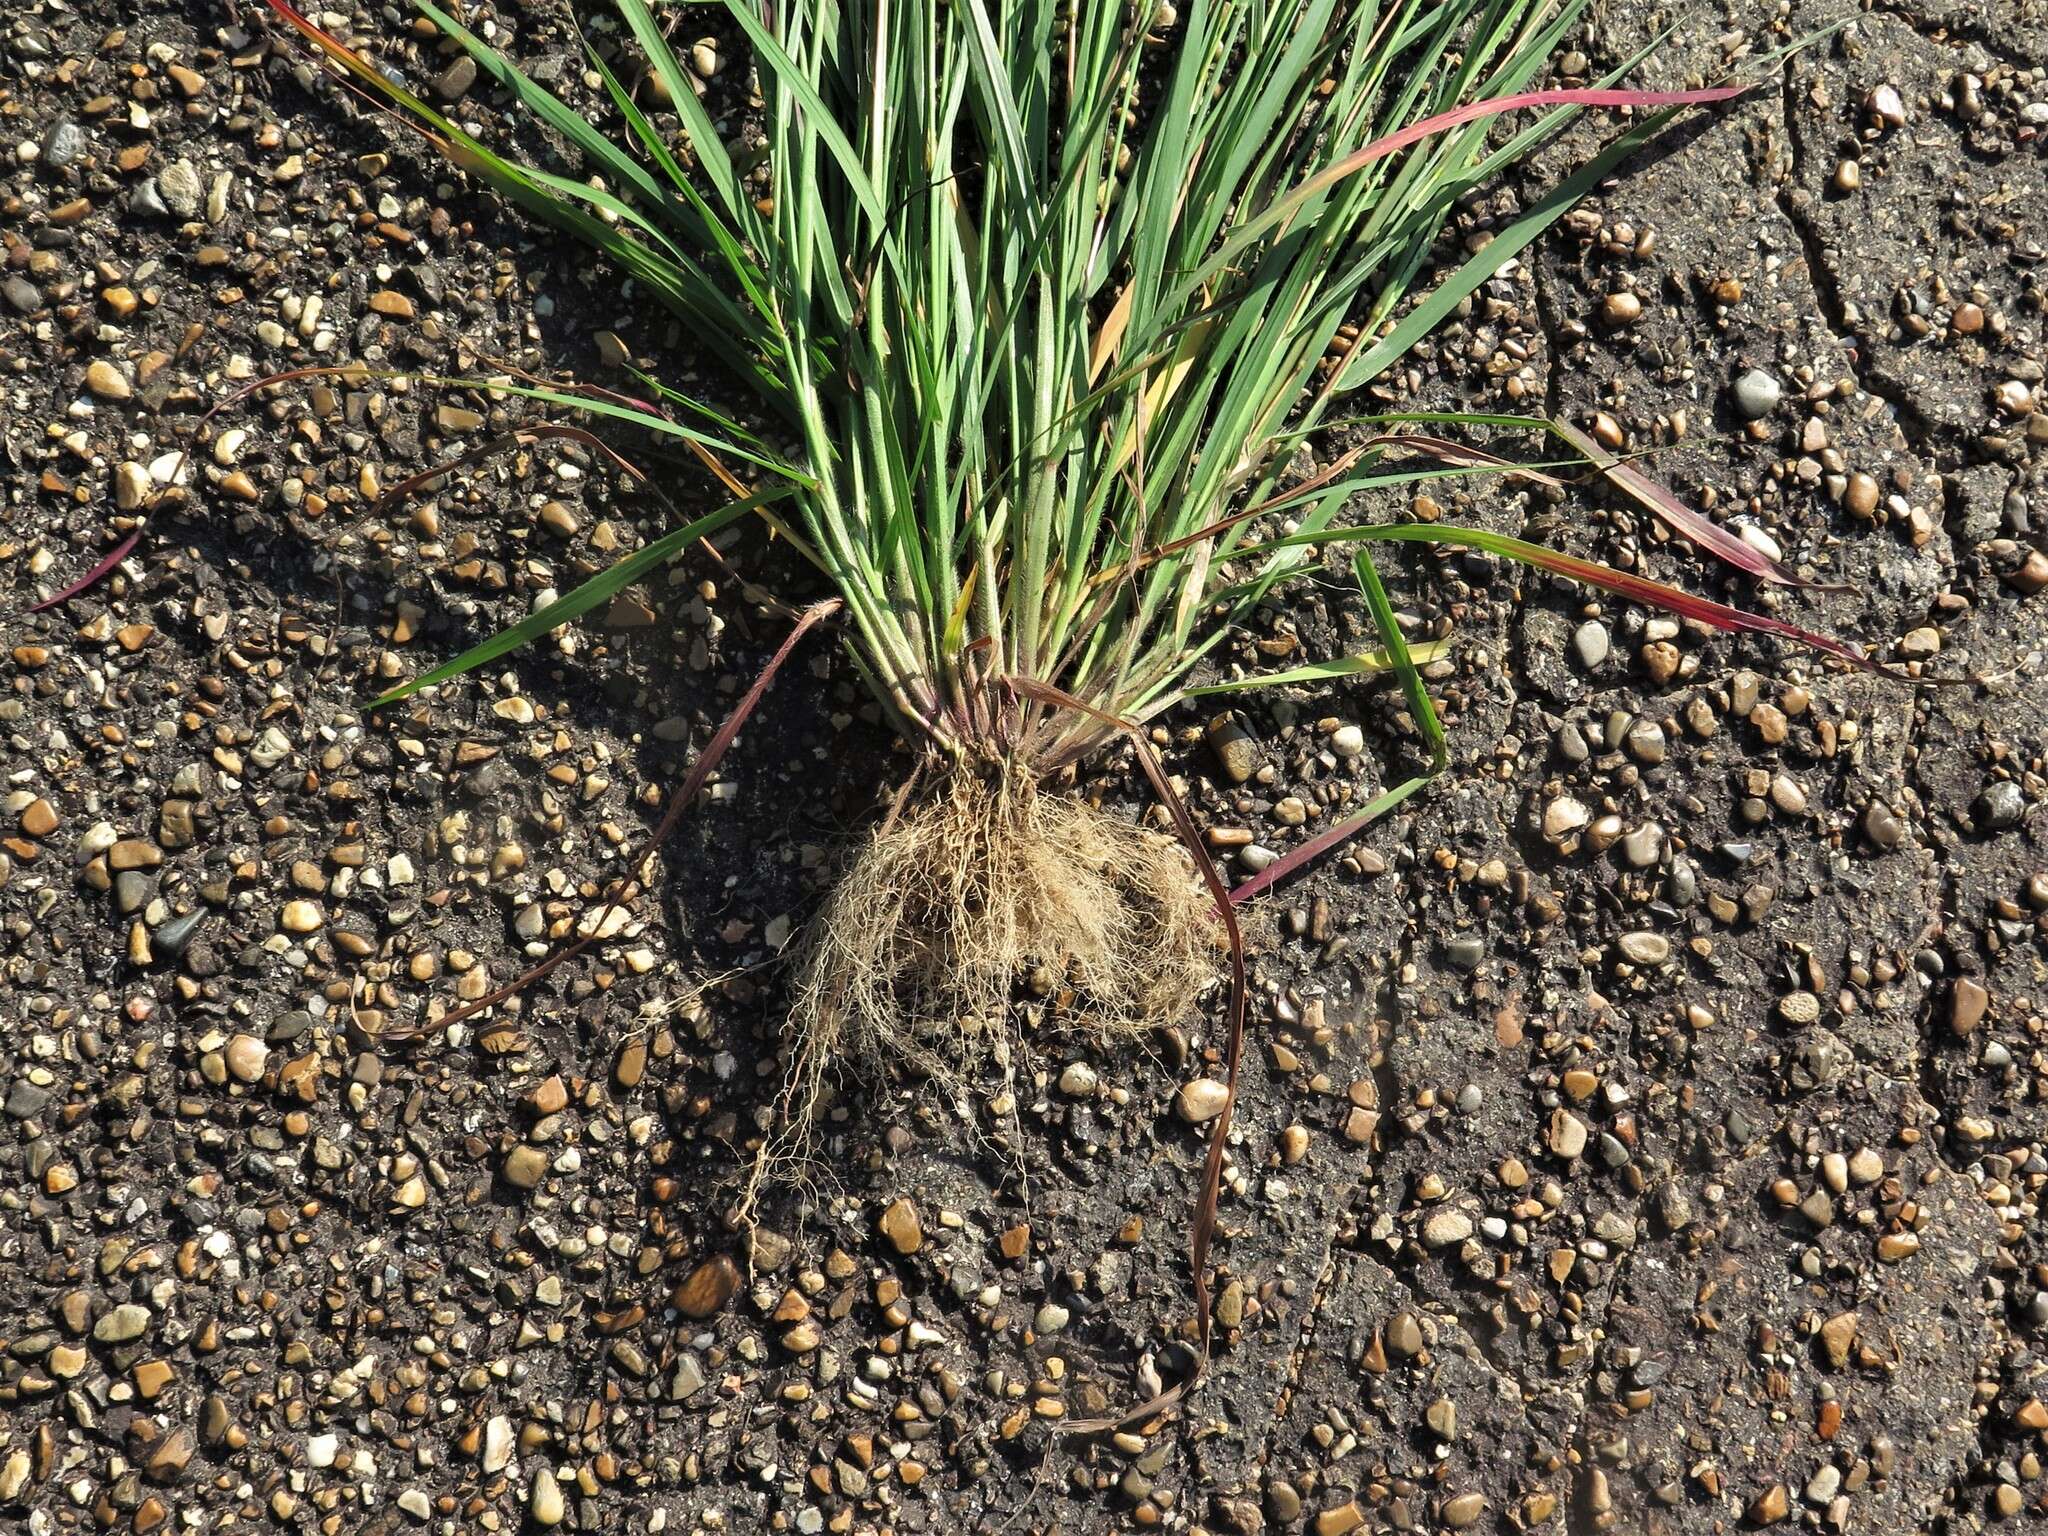 Image of shaggy crabgrass